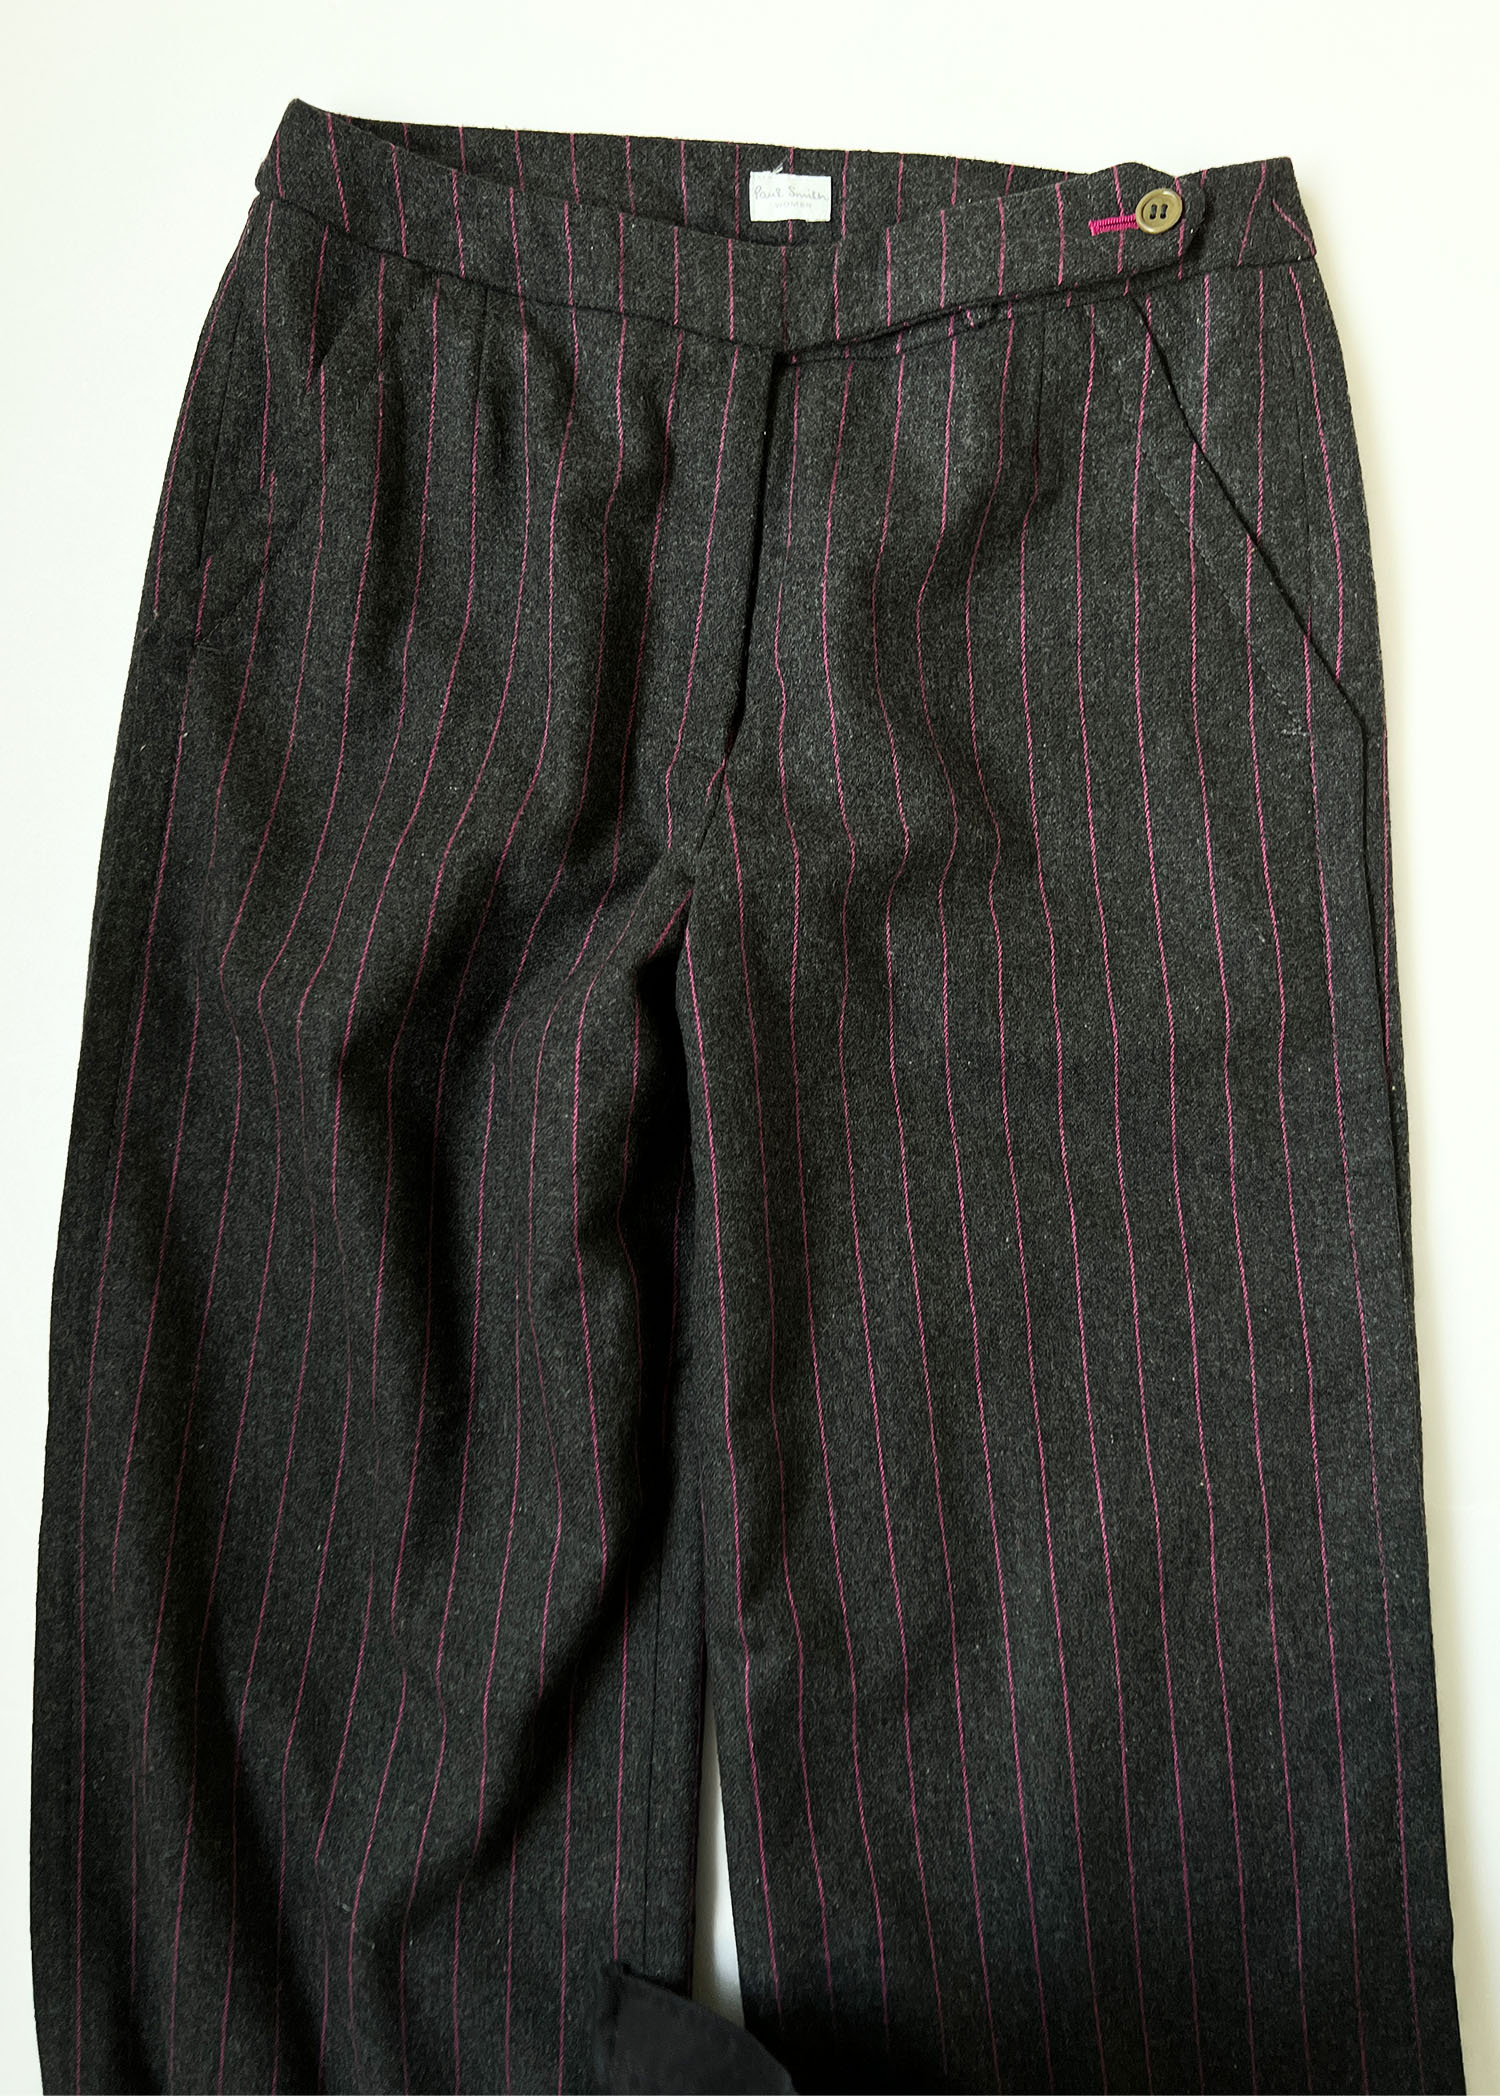 Paul smith pink stripe side detail pants